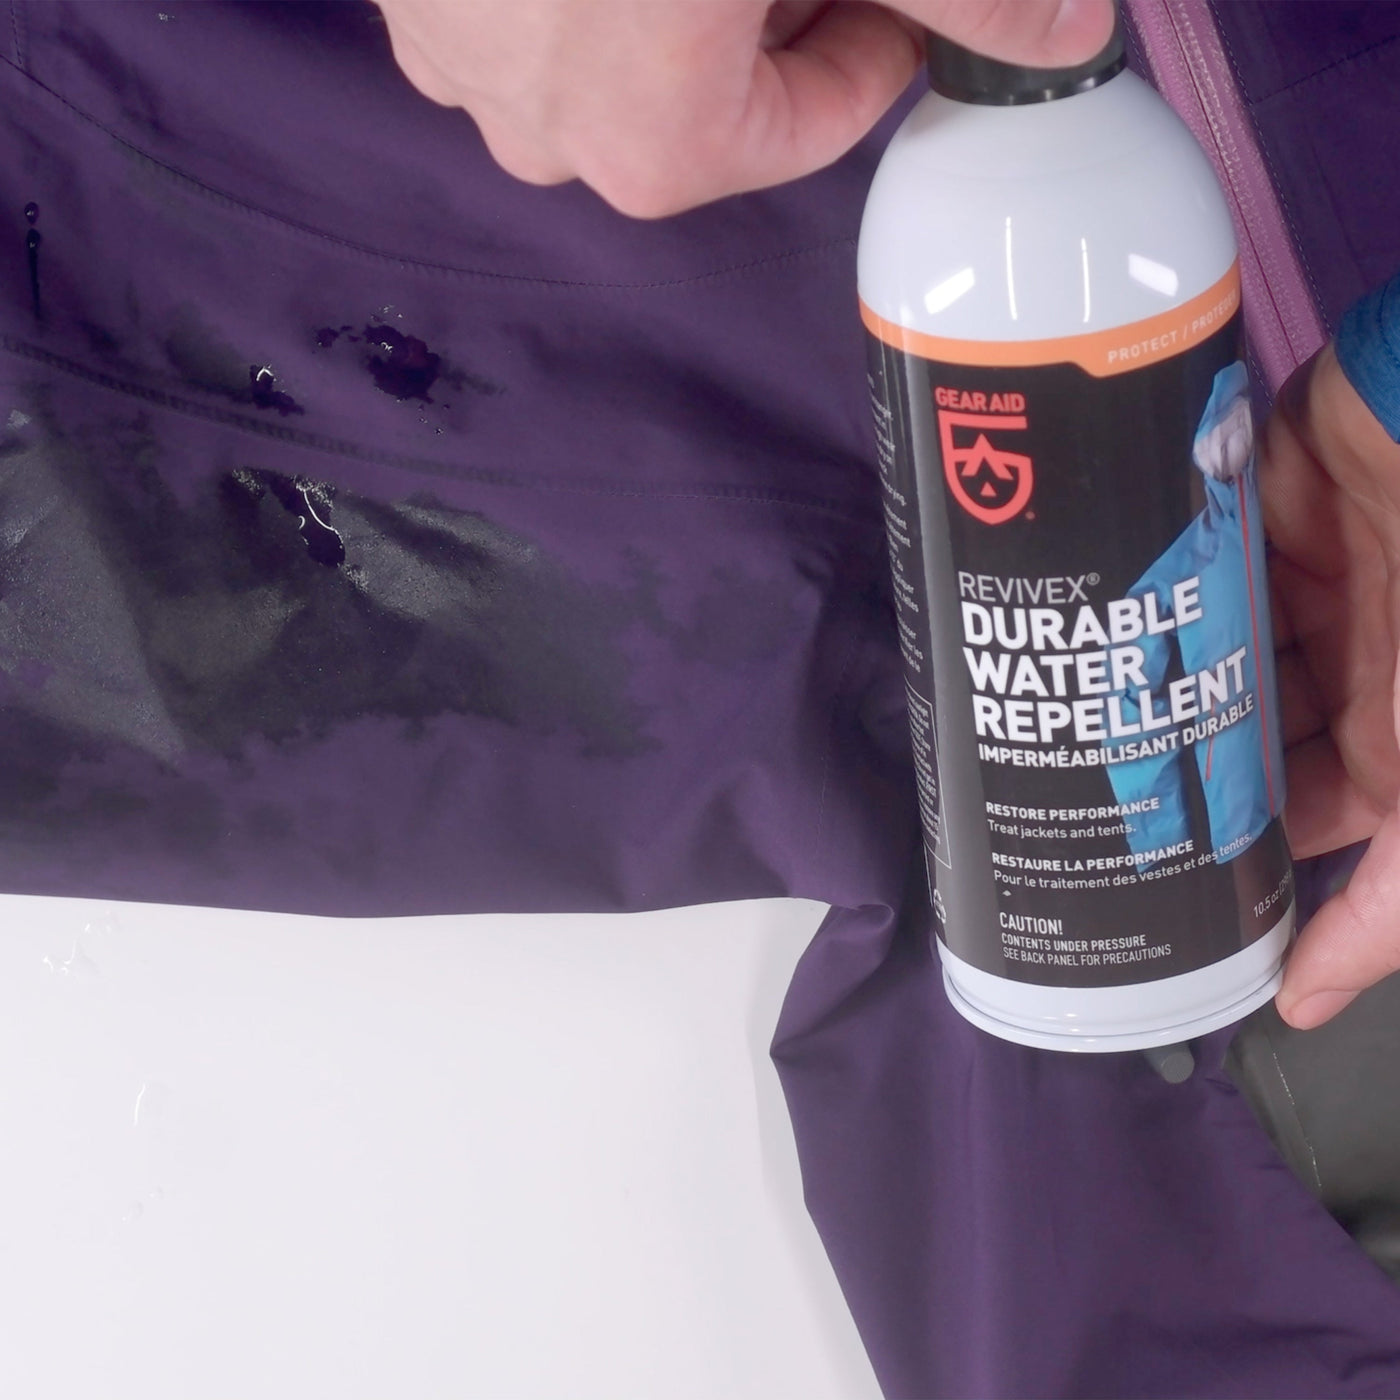 Gear Aid Revivex Wash-in Water Repellent — Woods + Waters Gear